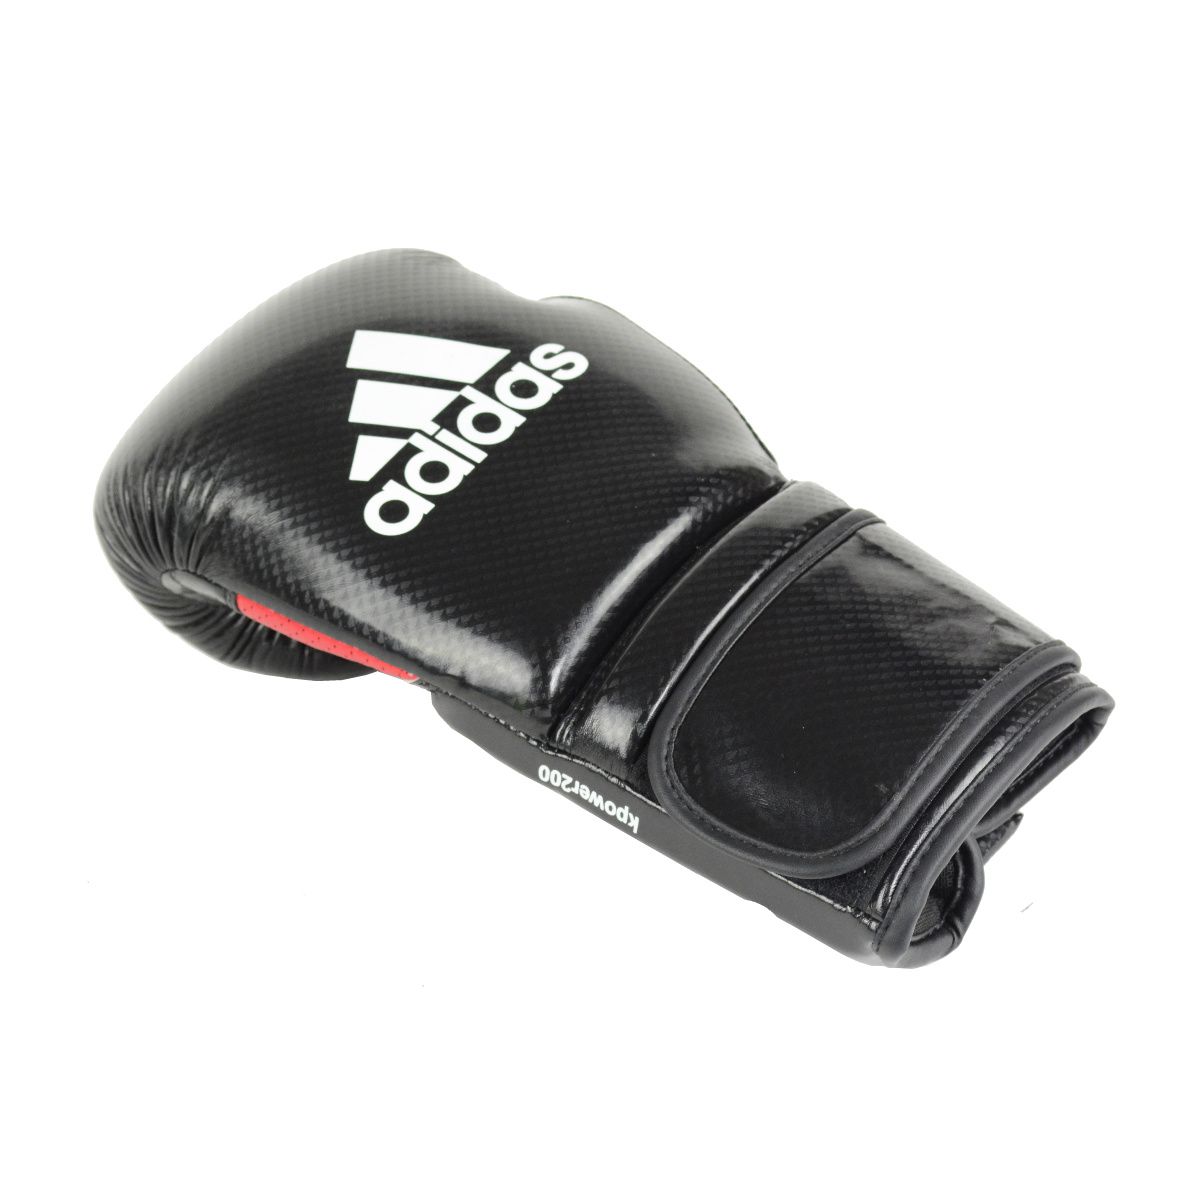 Luva de Kickboxing adidas KPower 200 - Preta/Vermelha